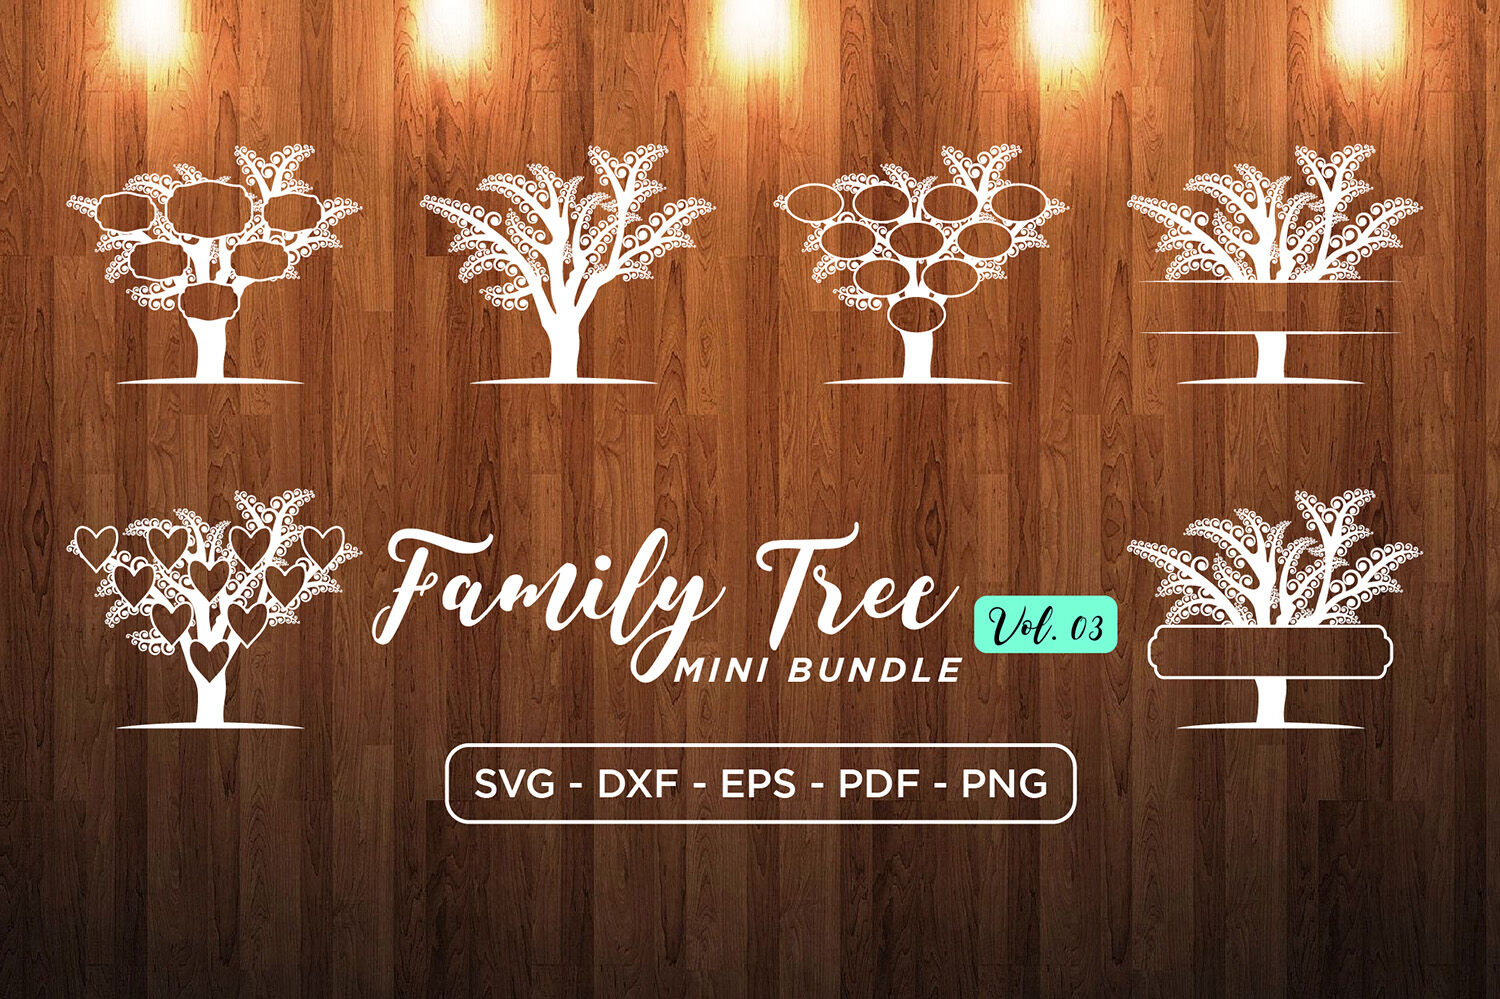 Download Family Tree Mega Bundle, Big SVG Bundle Of Tree / Family ...